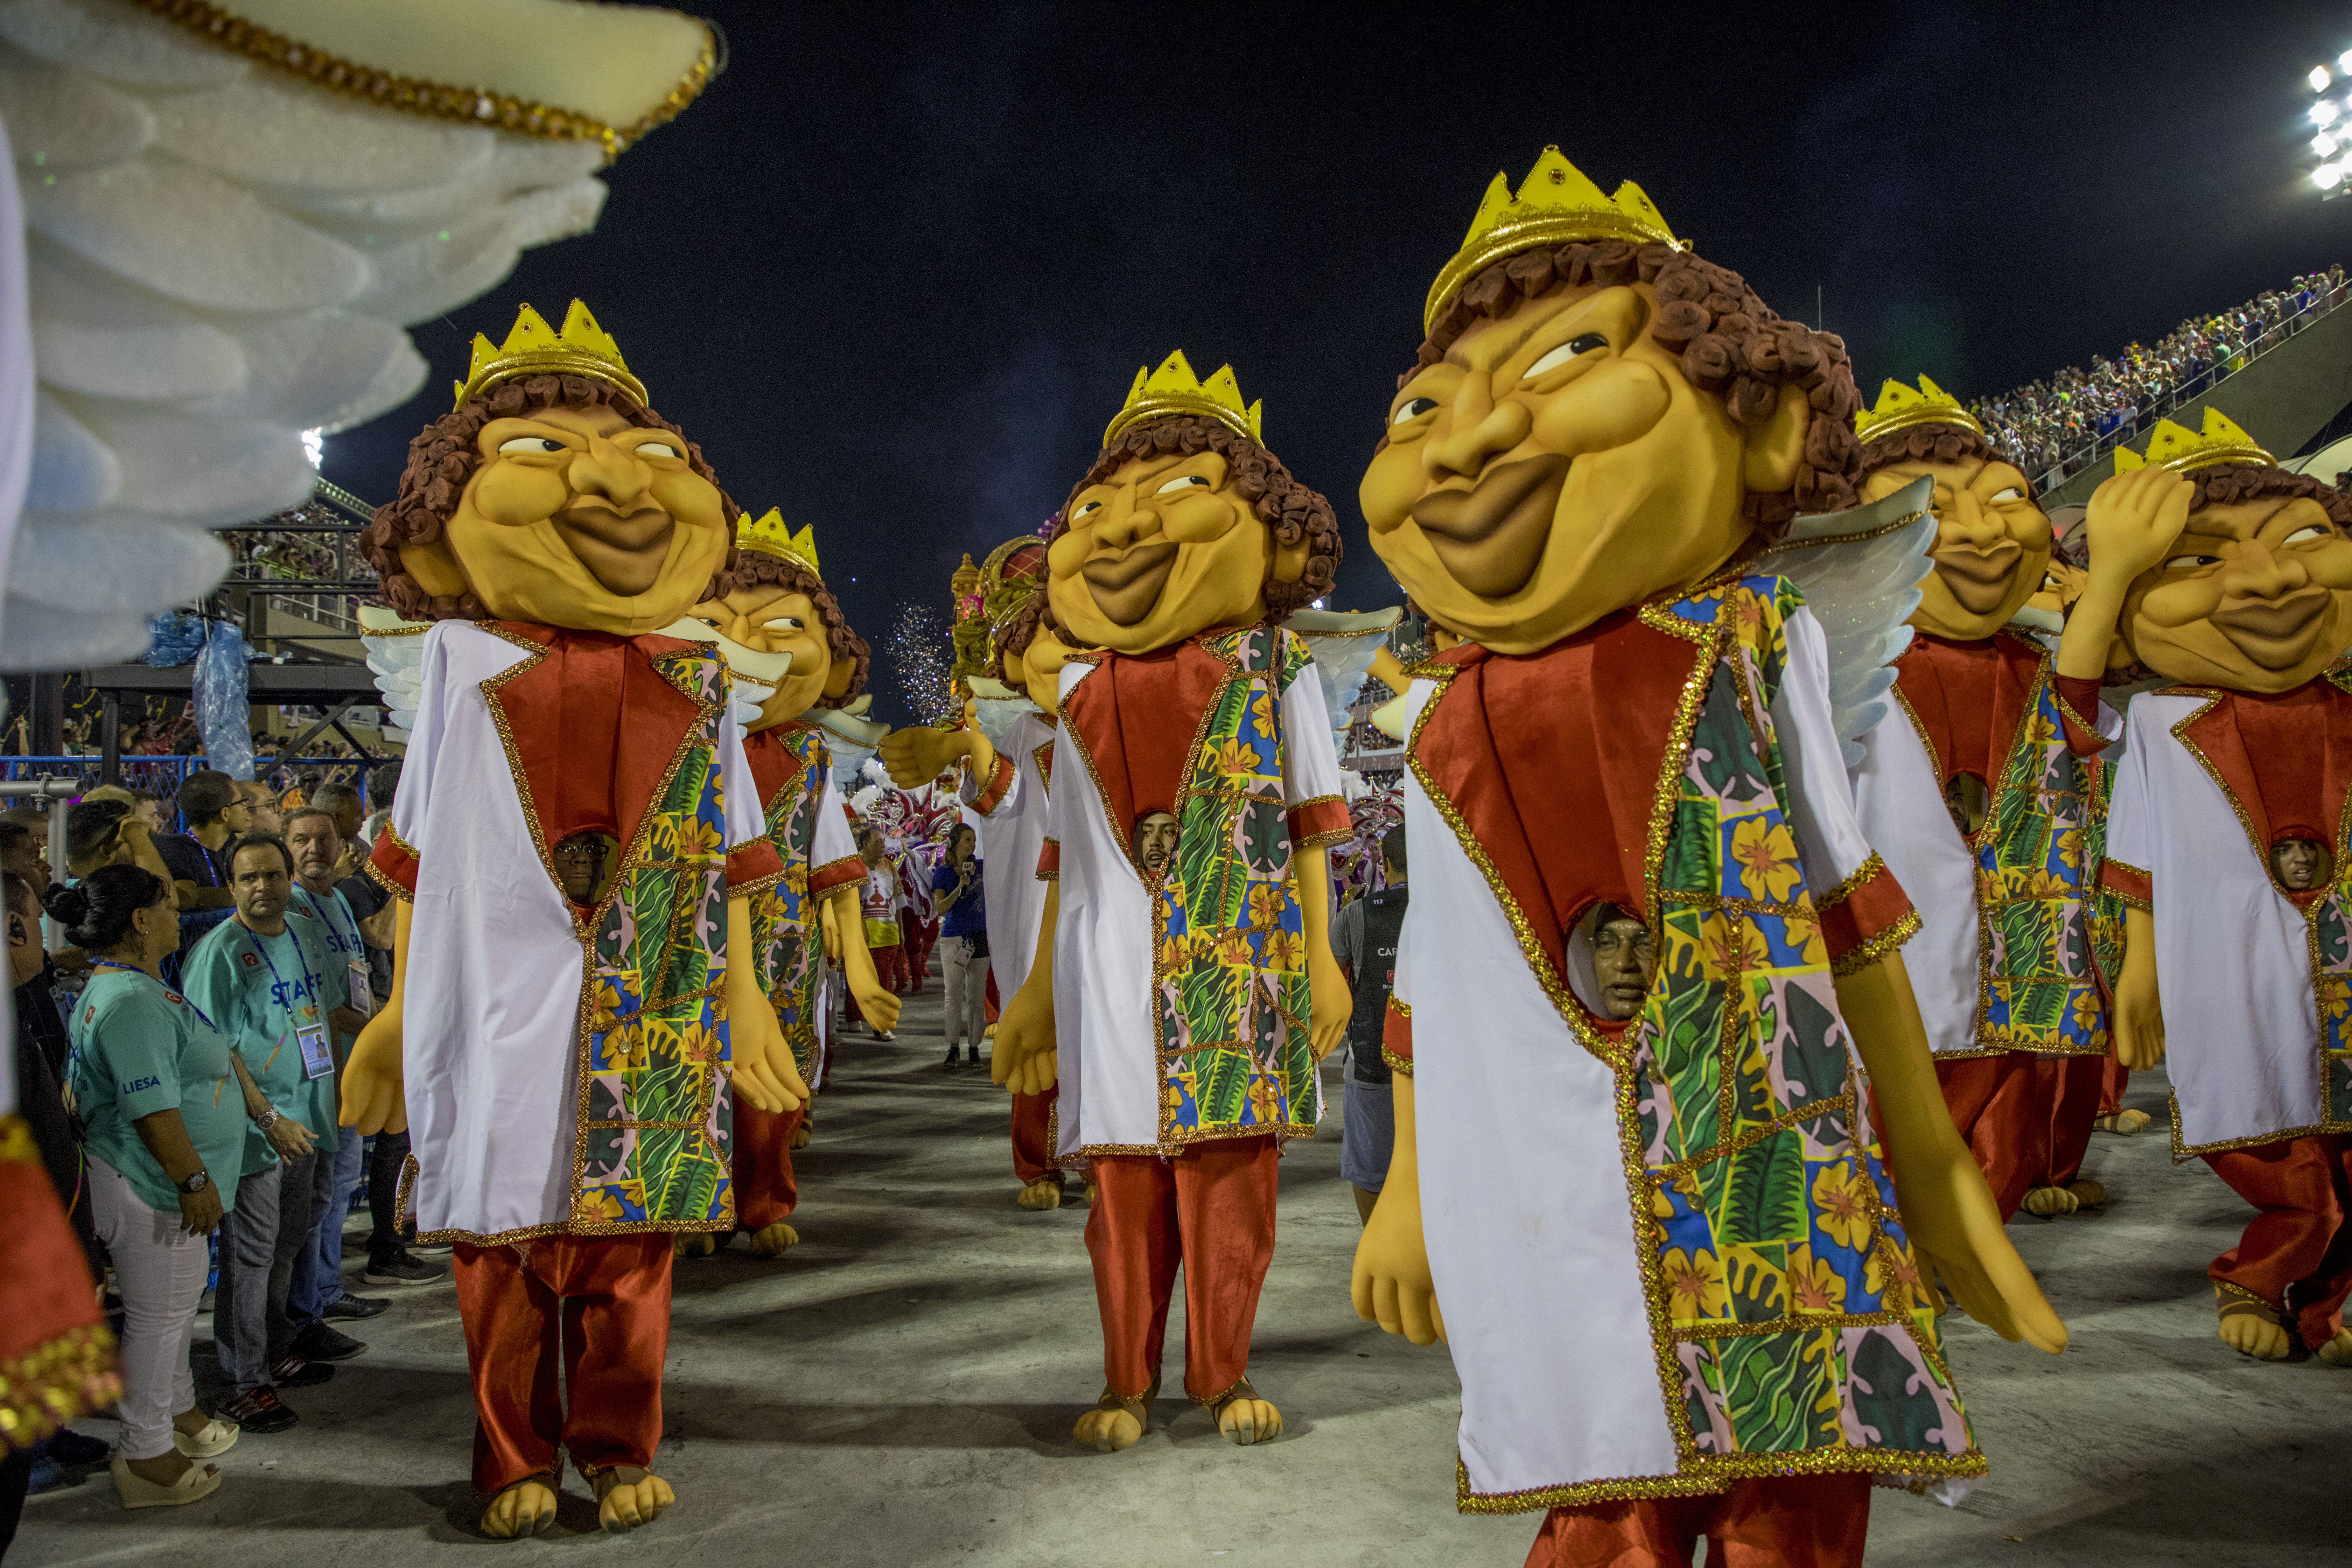 Elaborately costumed dancers performing at Carnival Samba